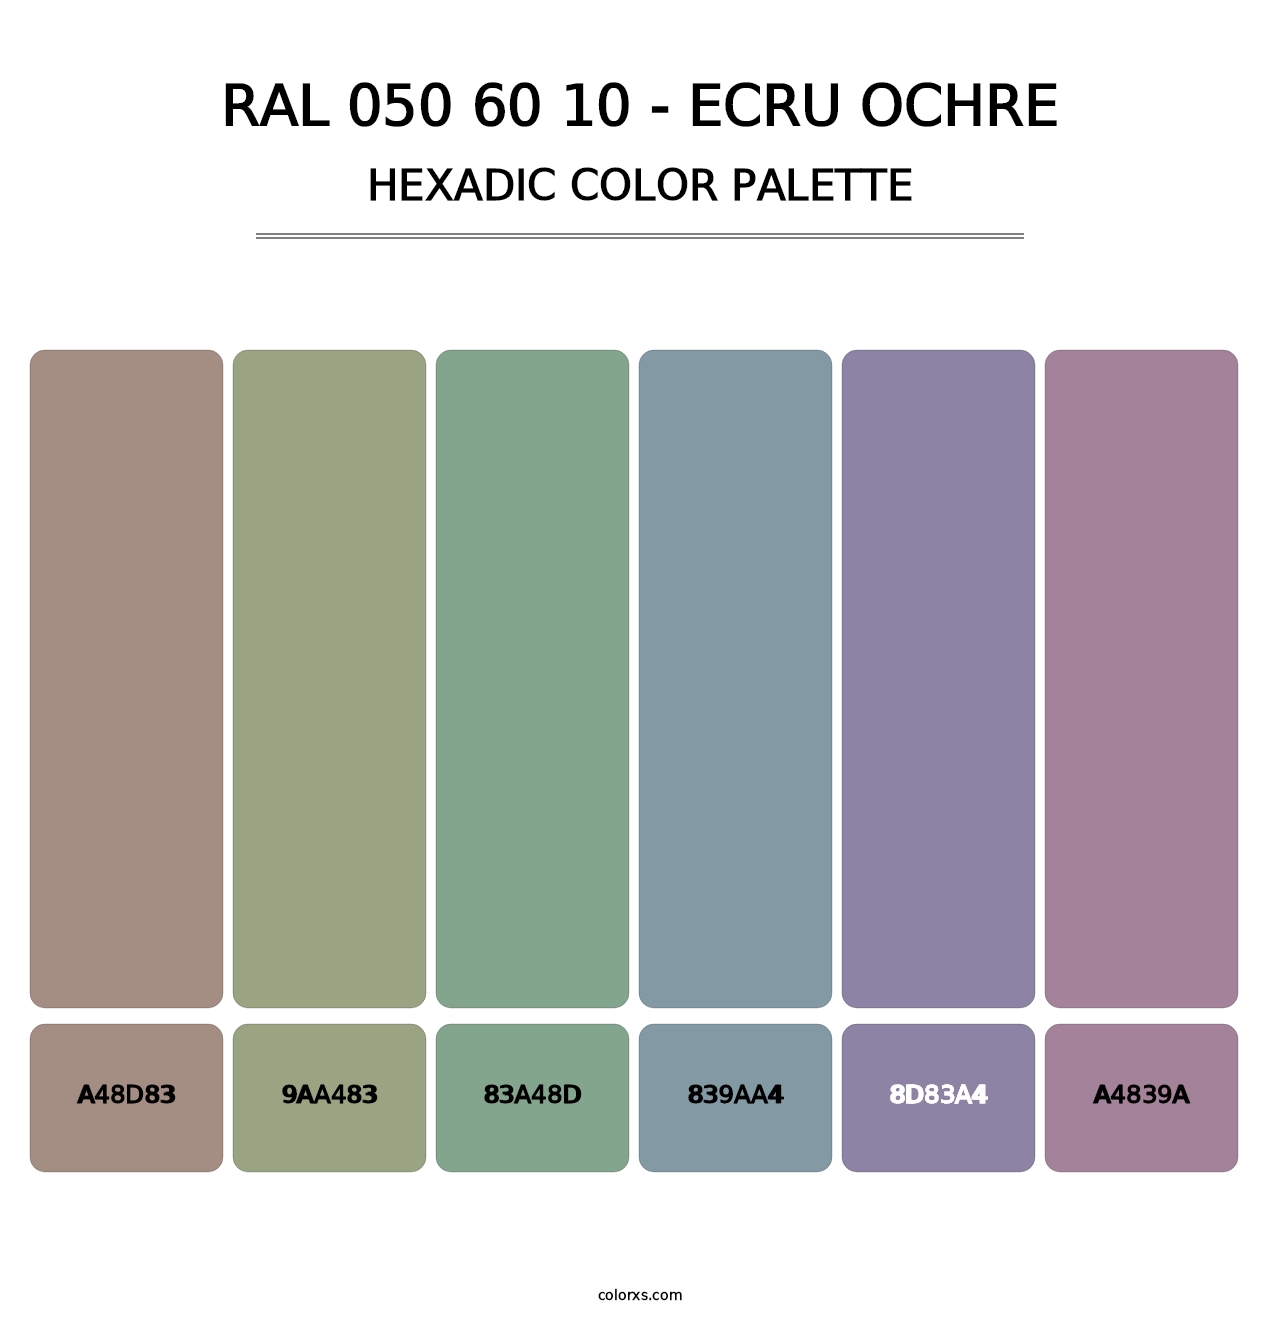 RAL 050 60 10 - Ecru Ochre - Hexadic Color Palette